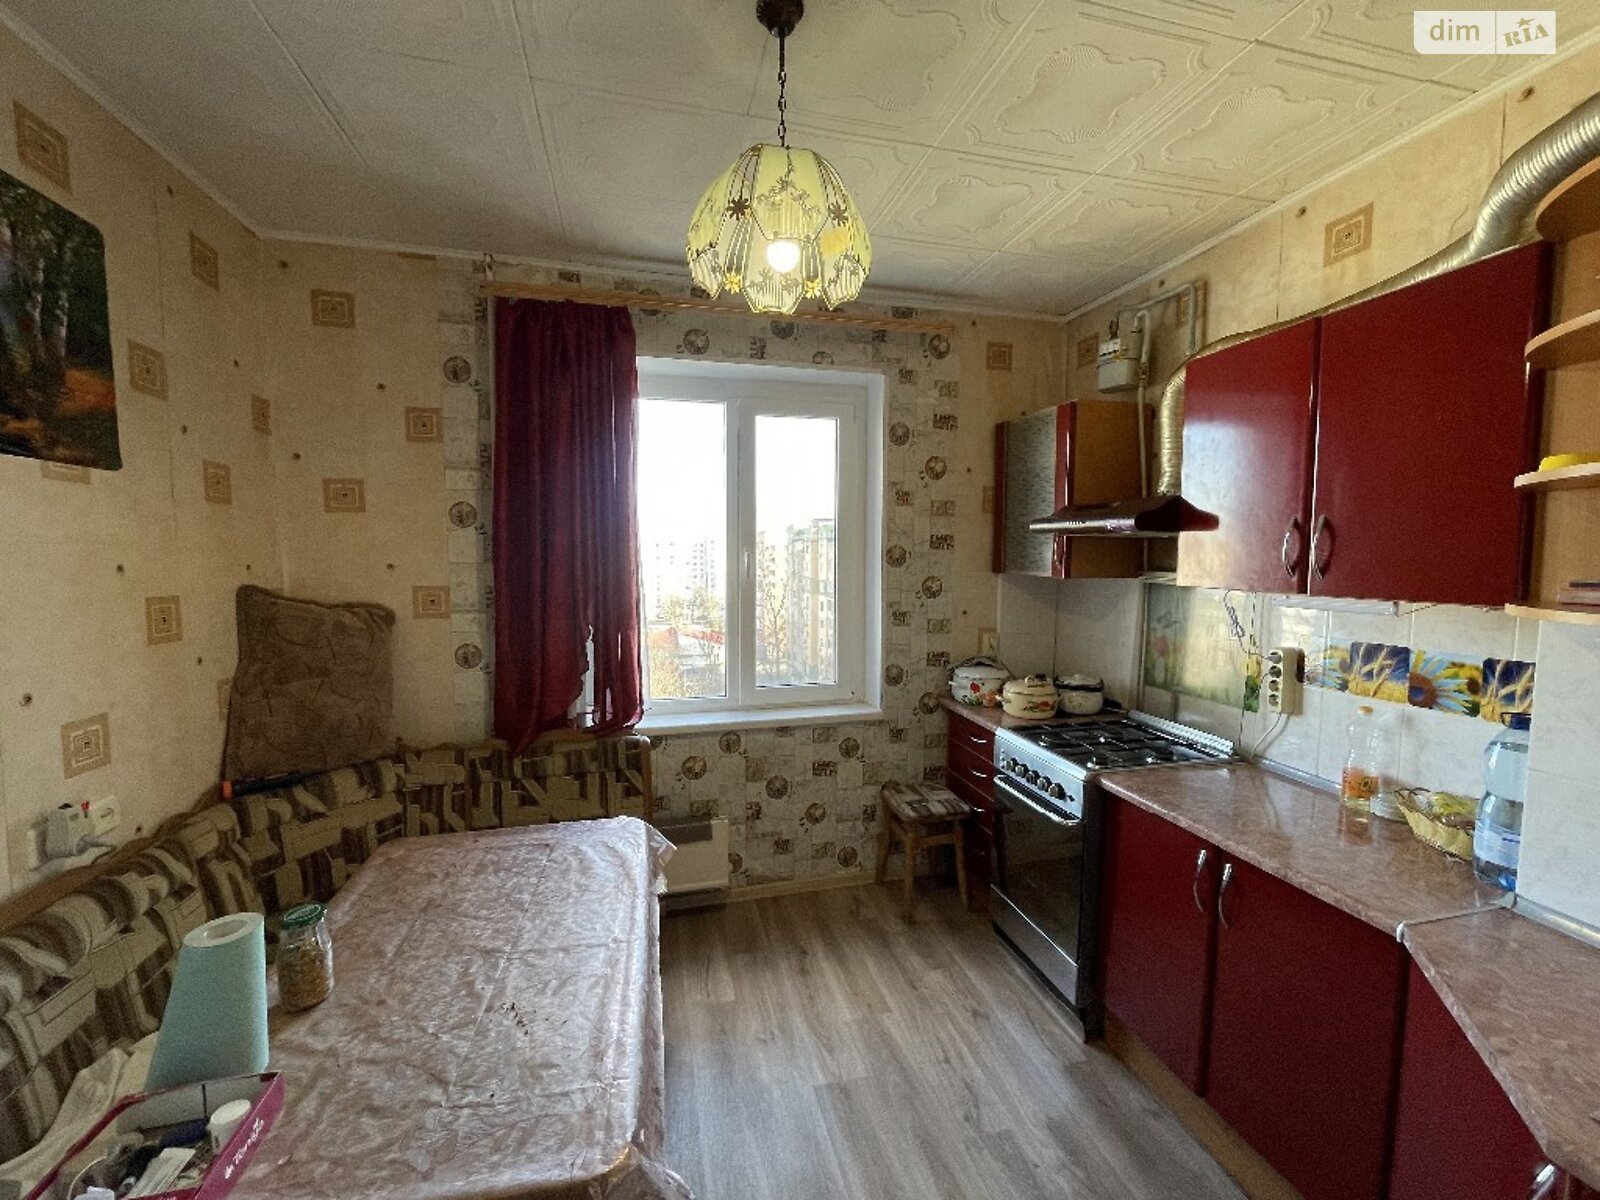 Продажа однокомнатной квартиры в Одессе, на ул. Академика Вильямса, район Таирова фото 1